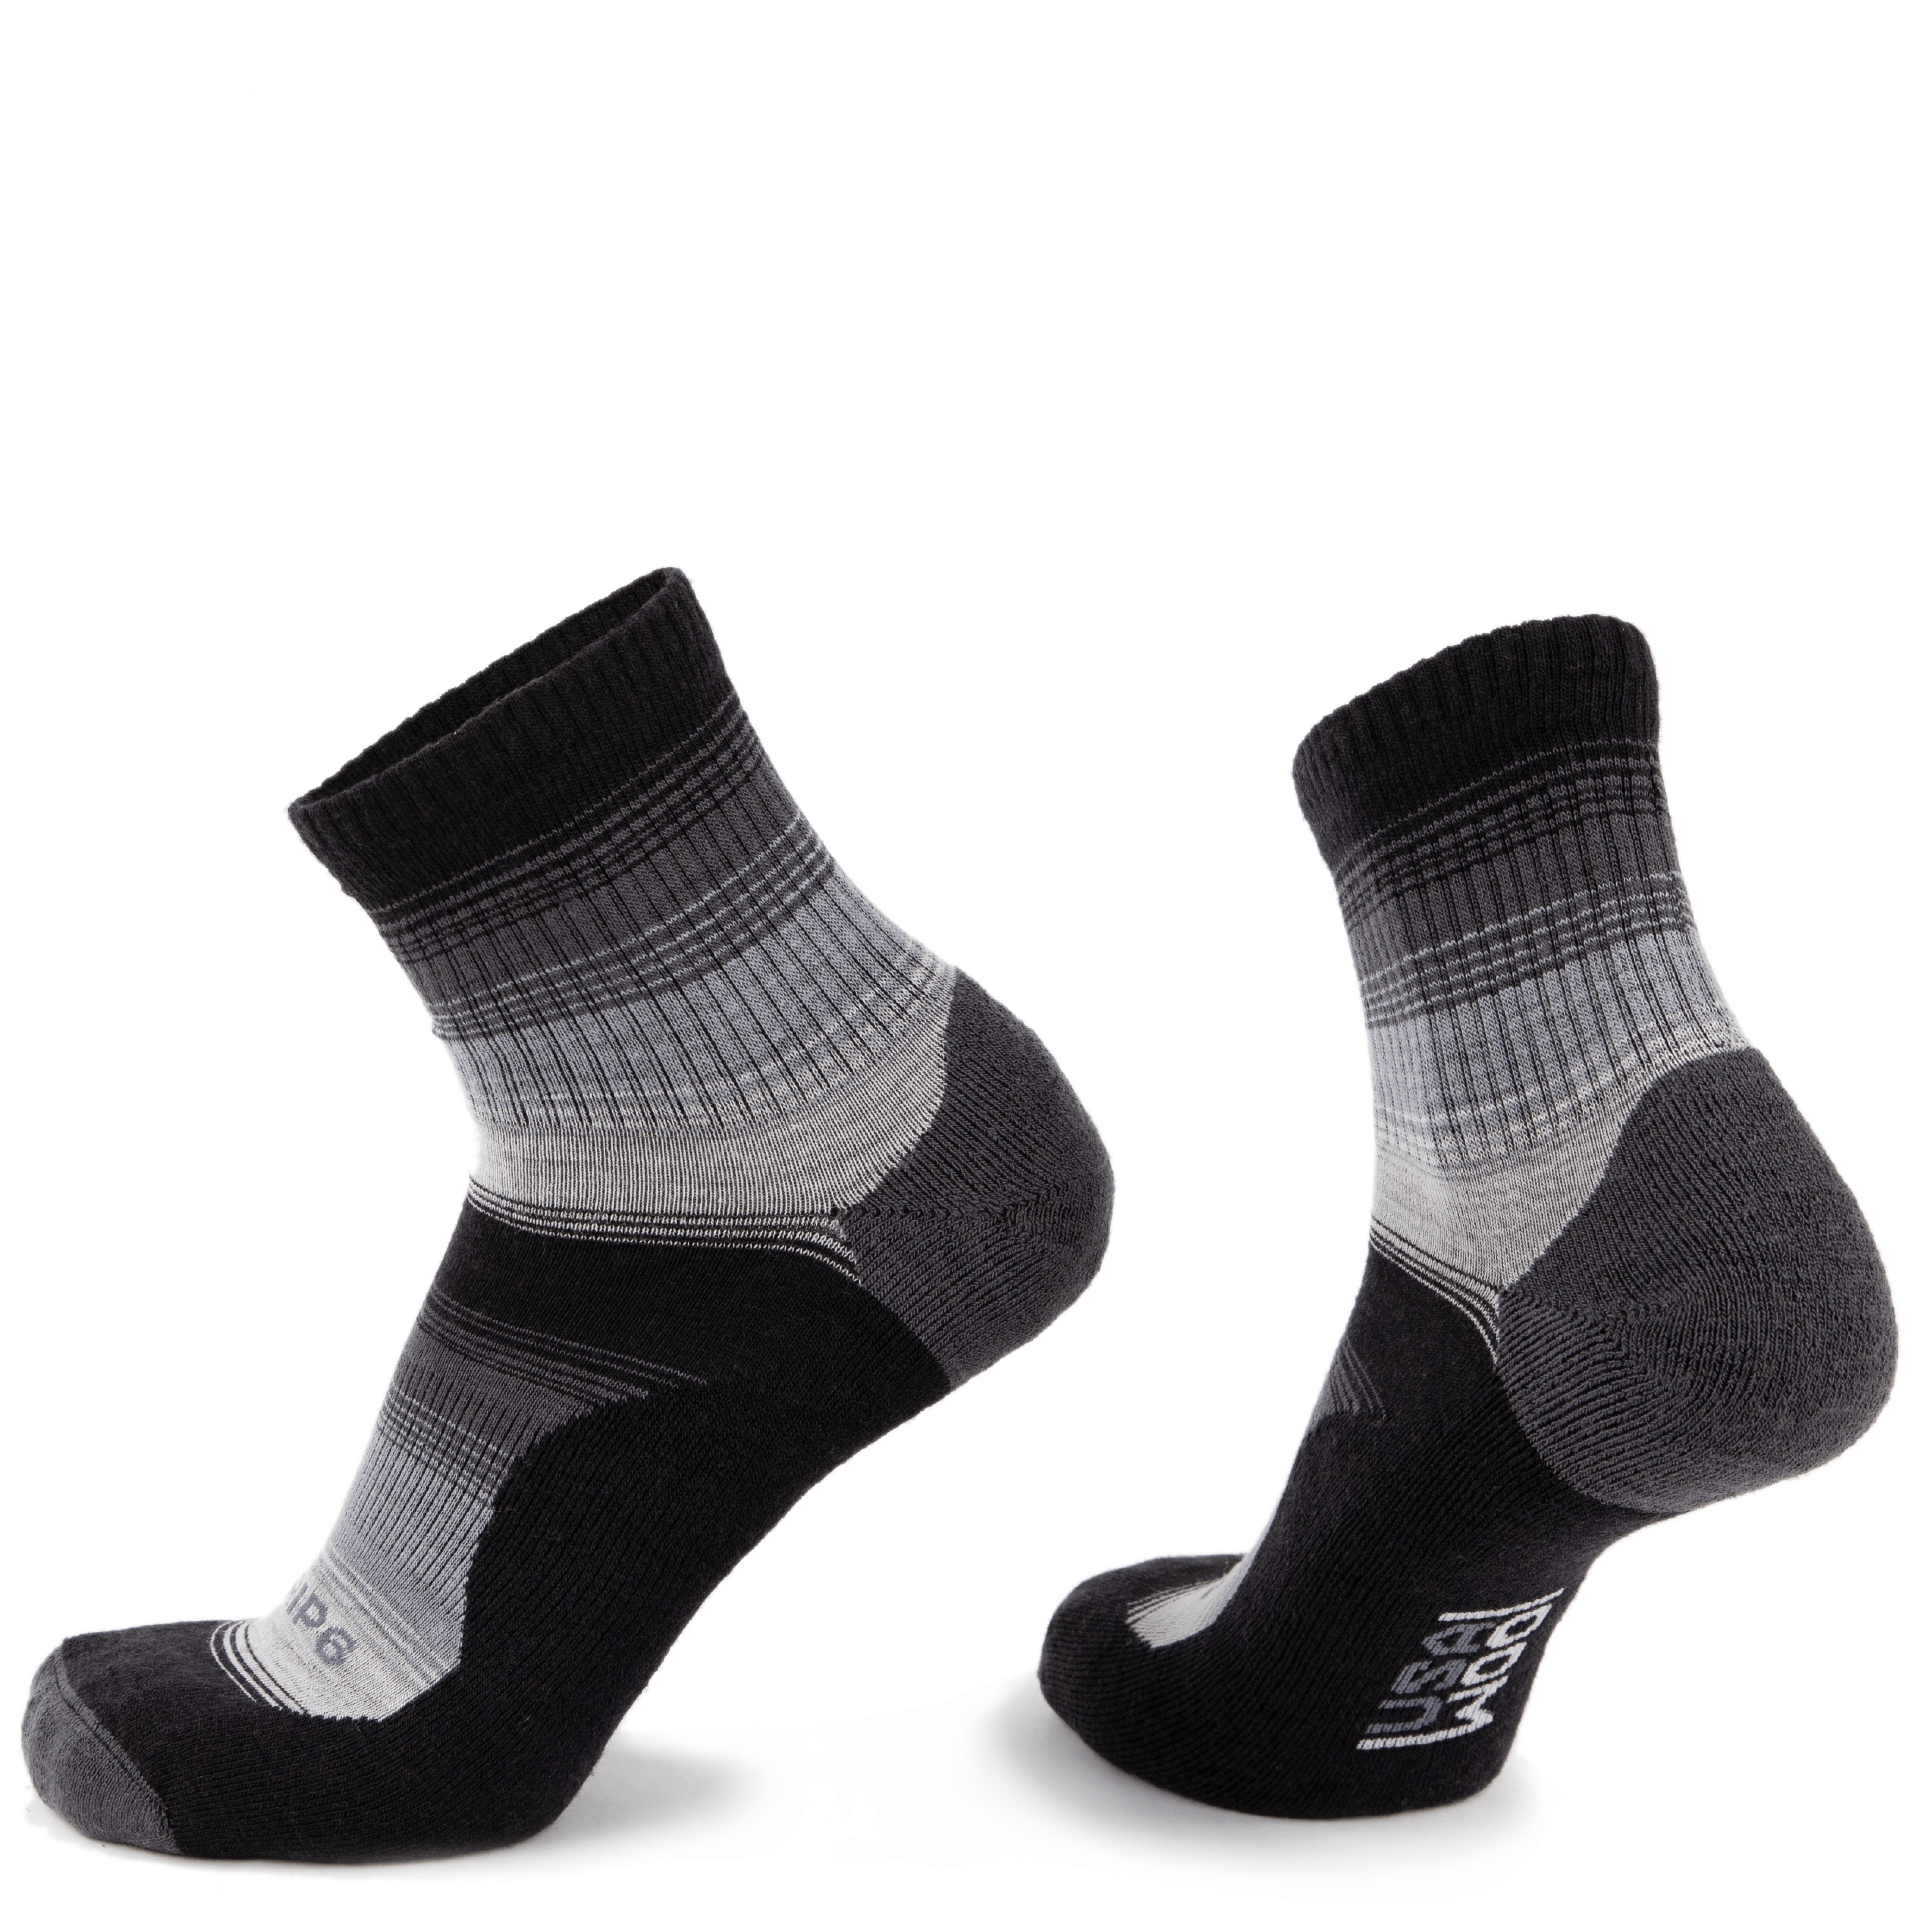 Wool Micro Crew Socks - Fade Black 2 Pair